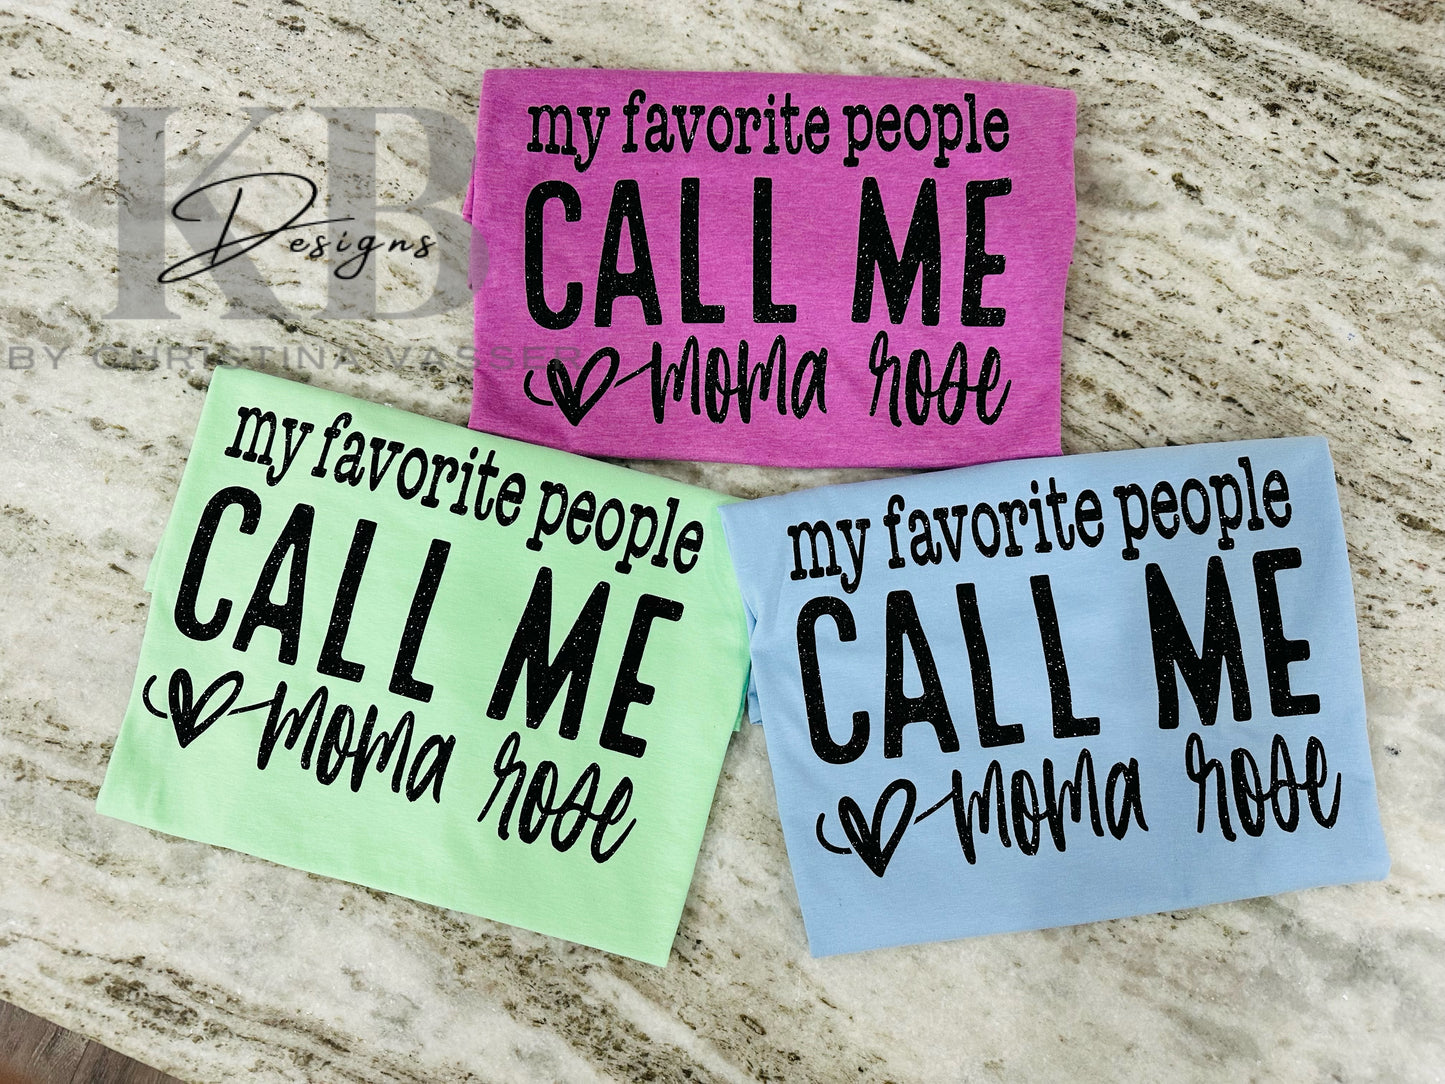 My Favorite People call me ….